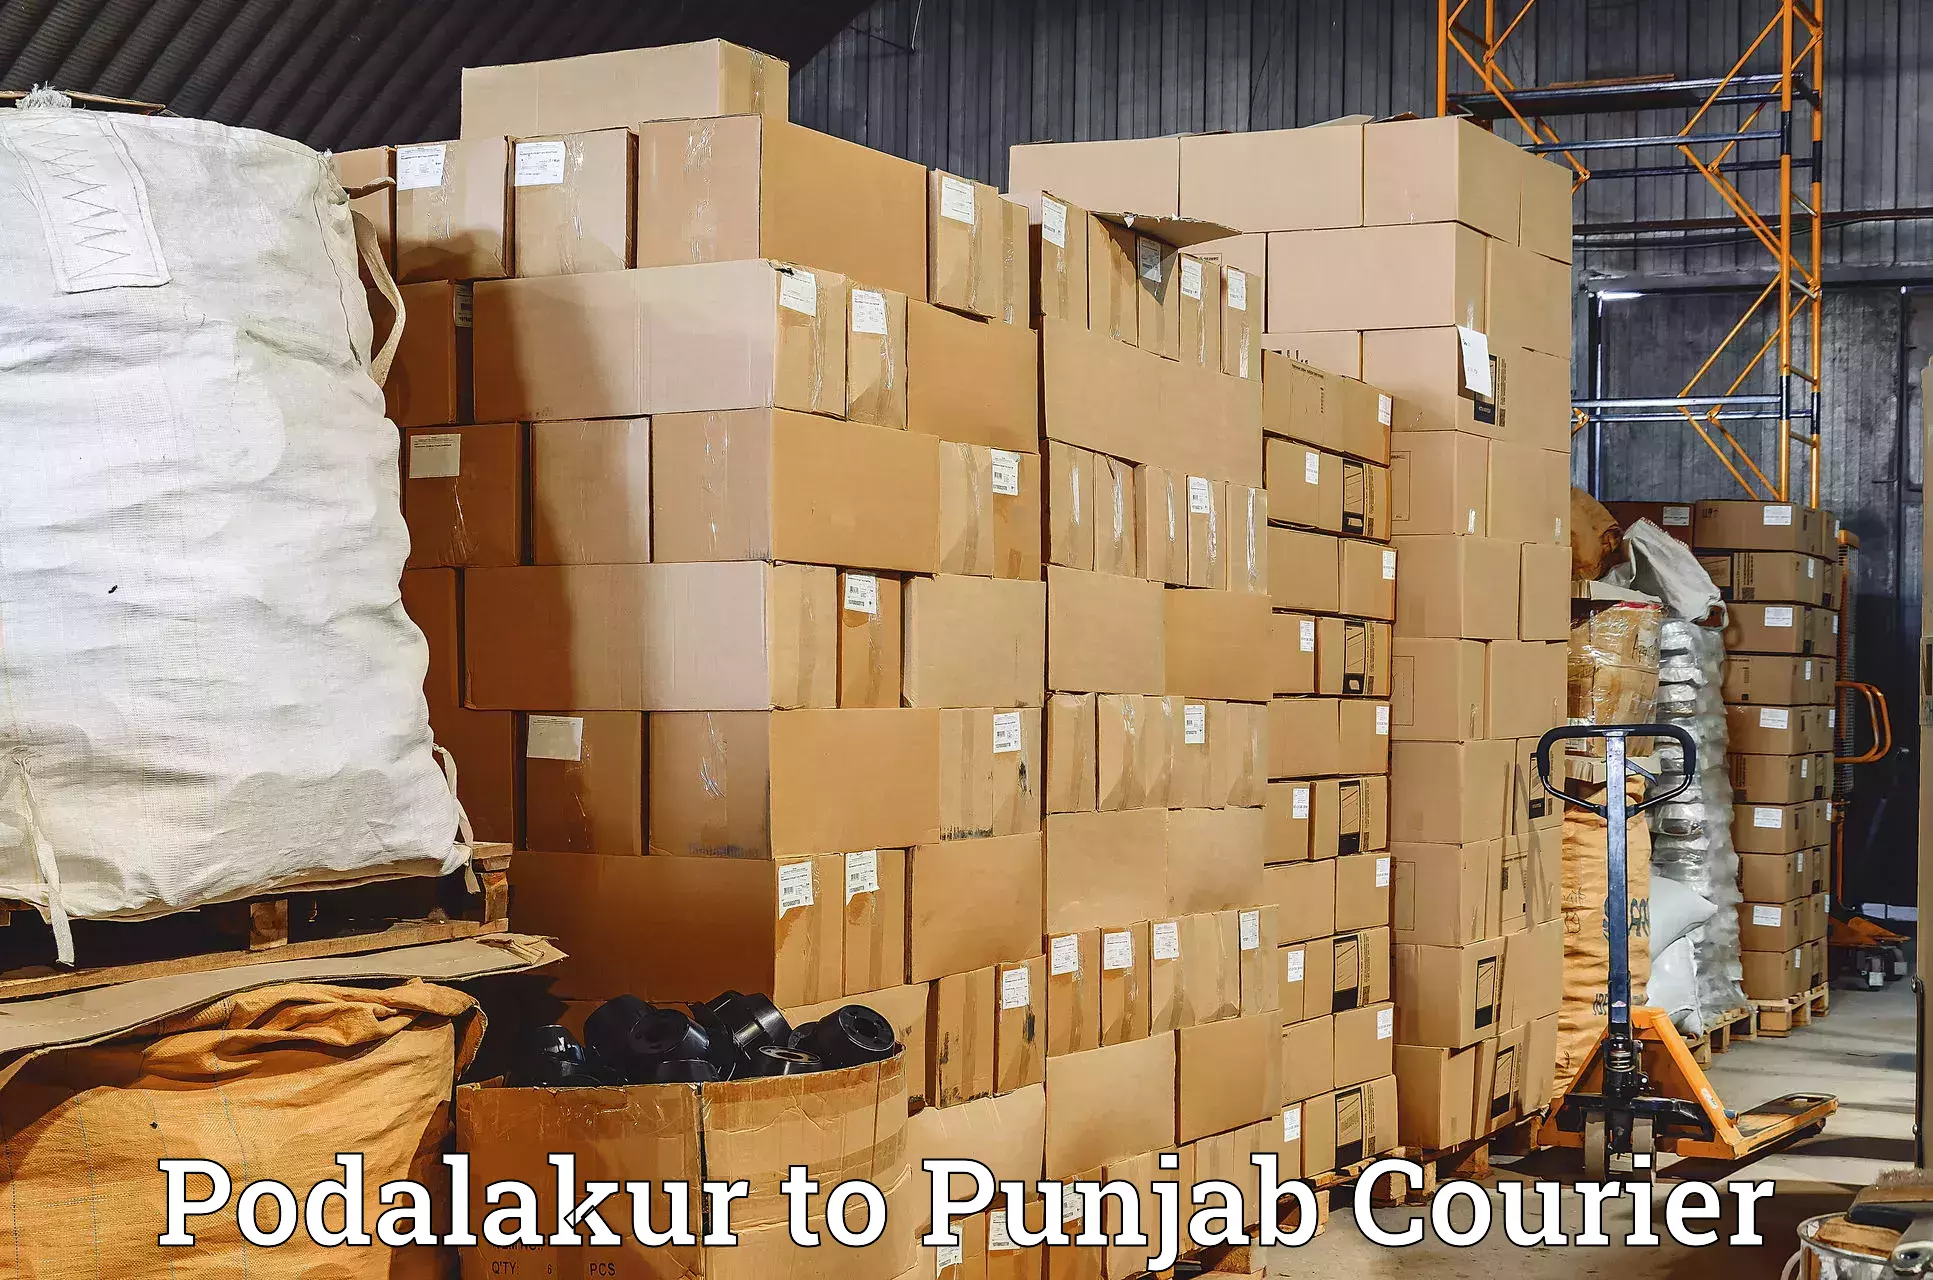 Courier service partnerships Podalakur to Faridkot